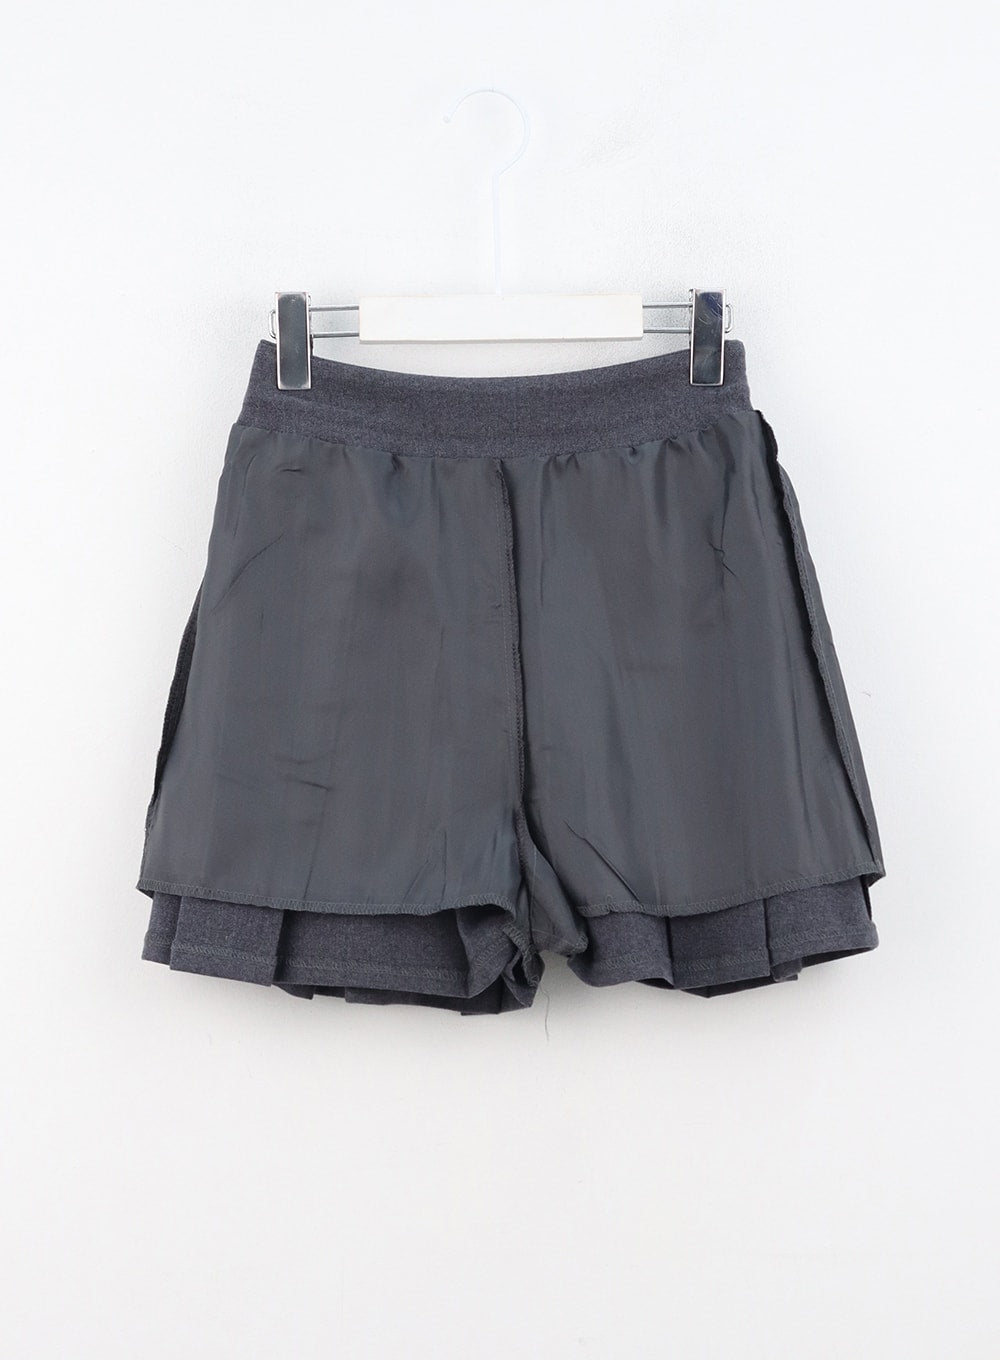 pleated-mini-skirt-in314